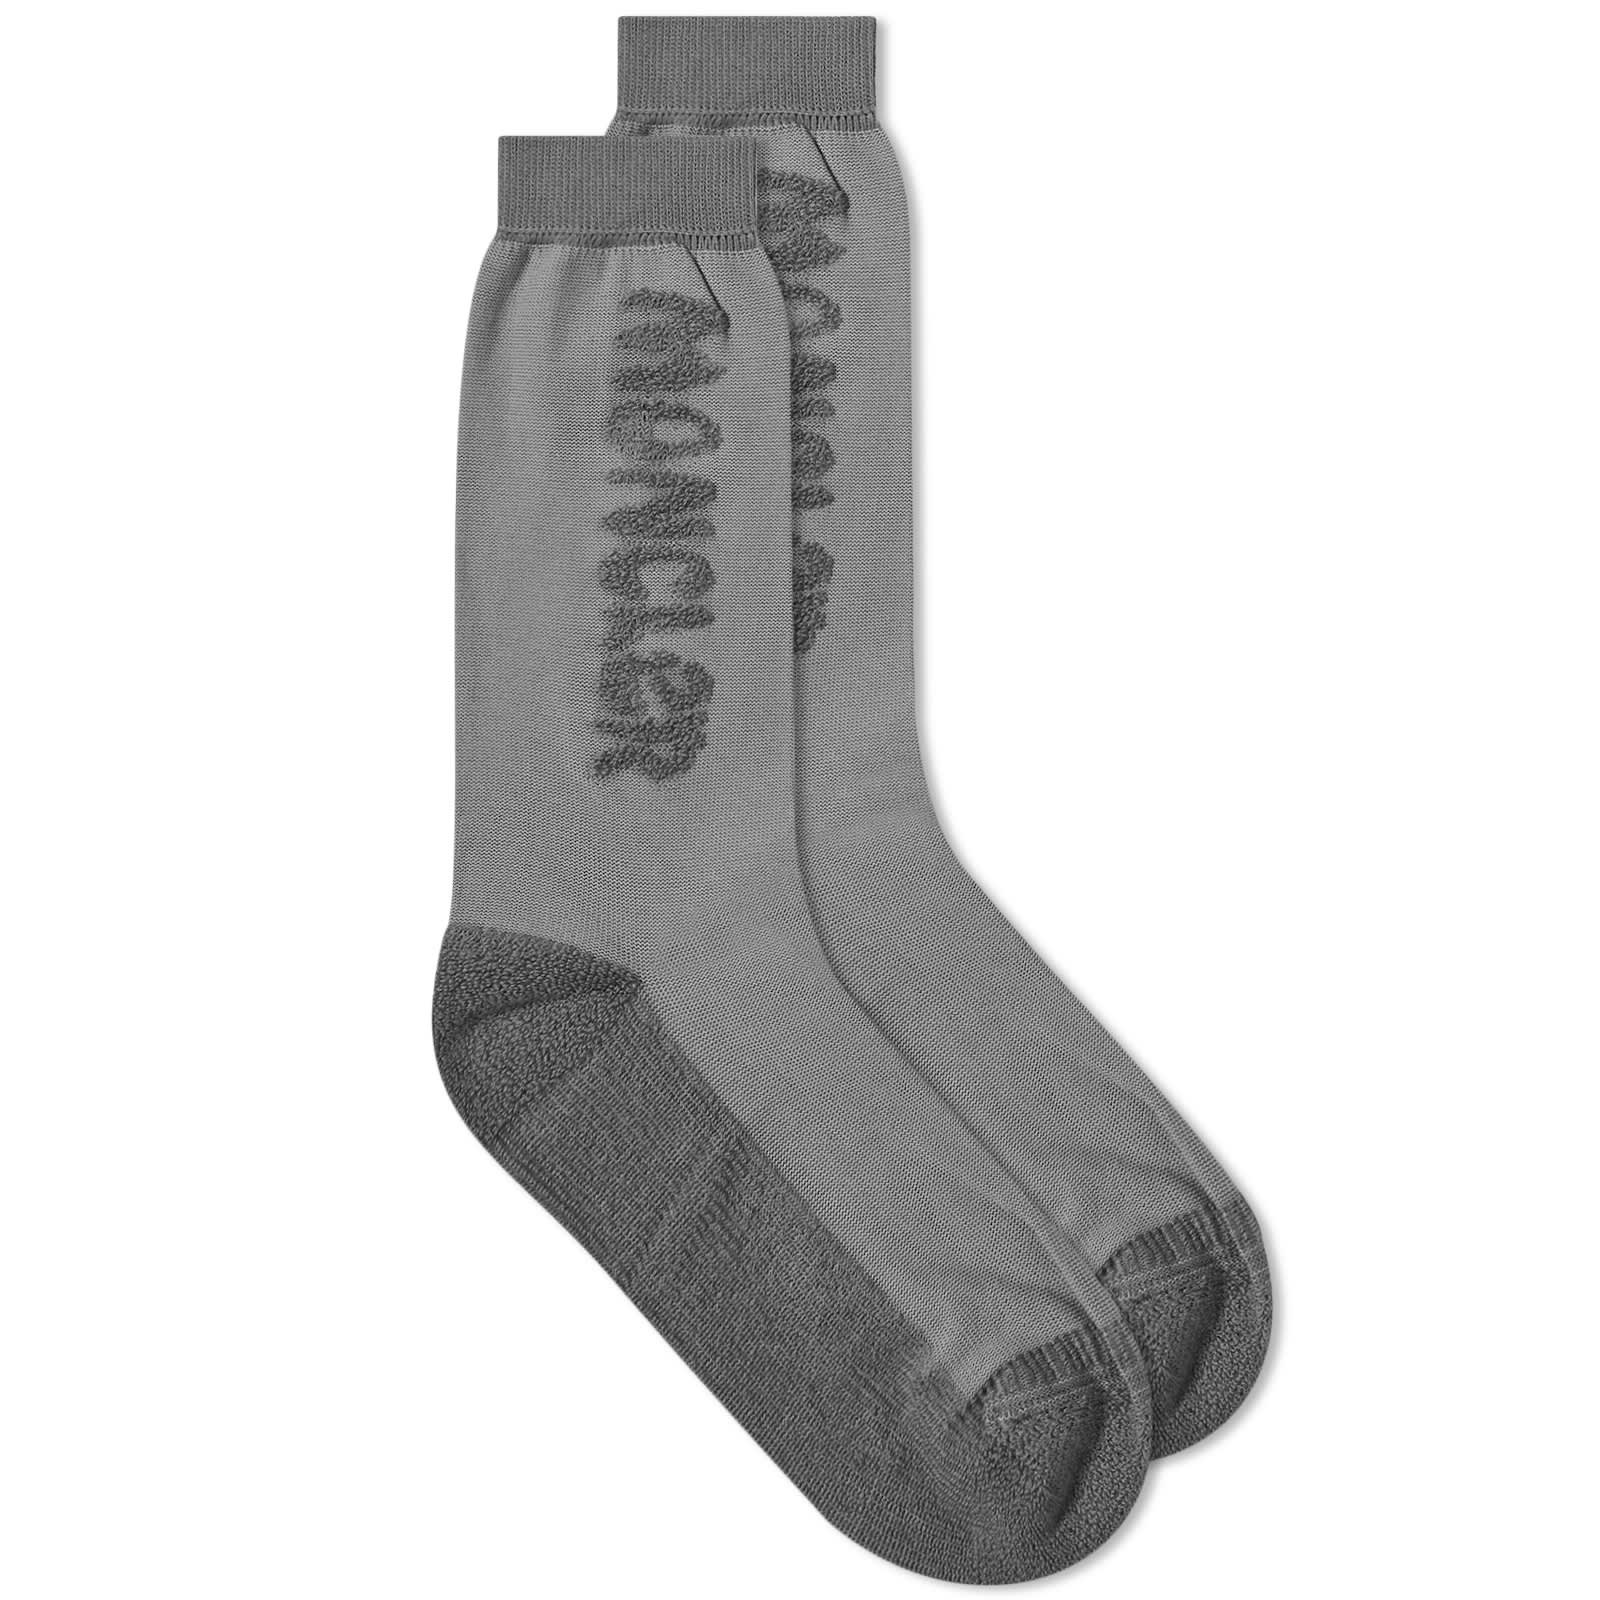 Moncler Genius x Salehe Bembury Socks - 1